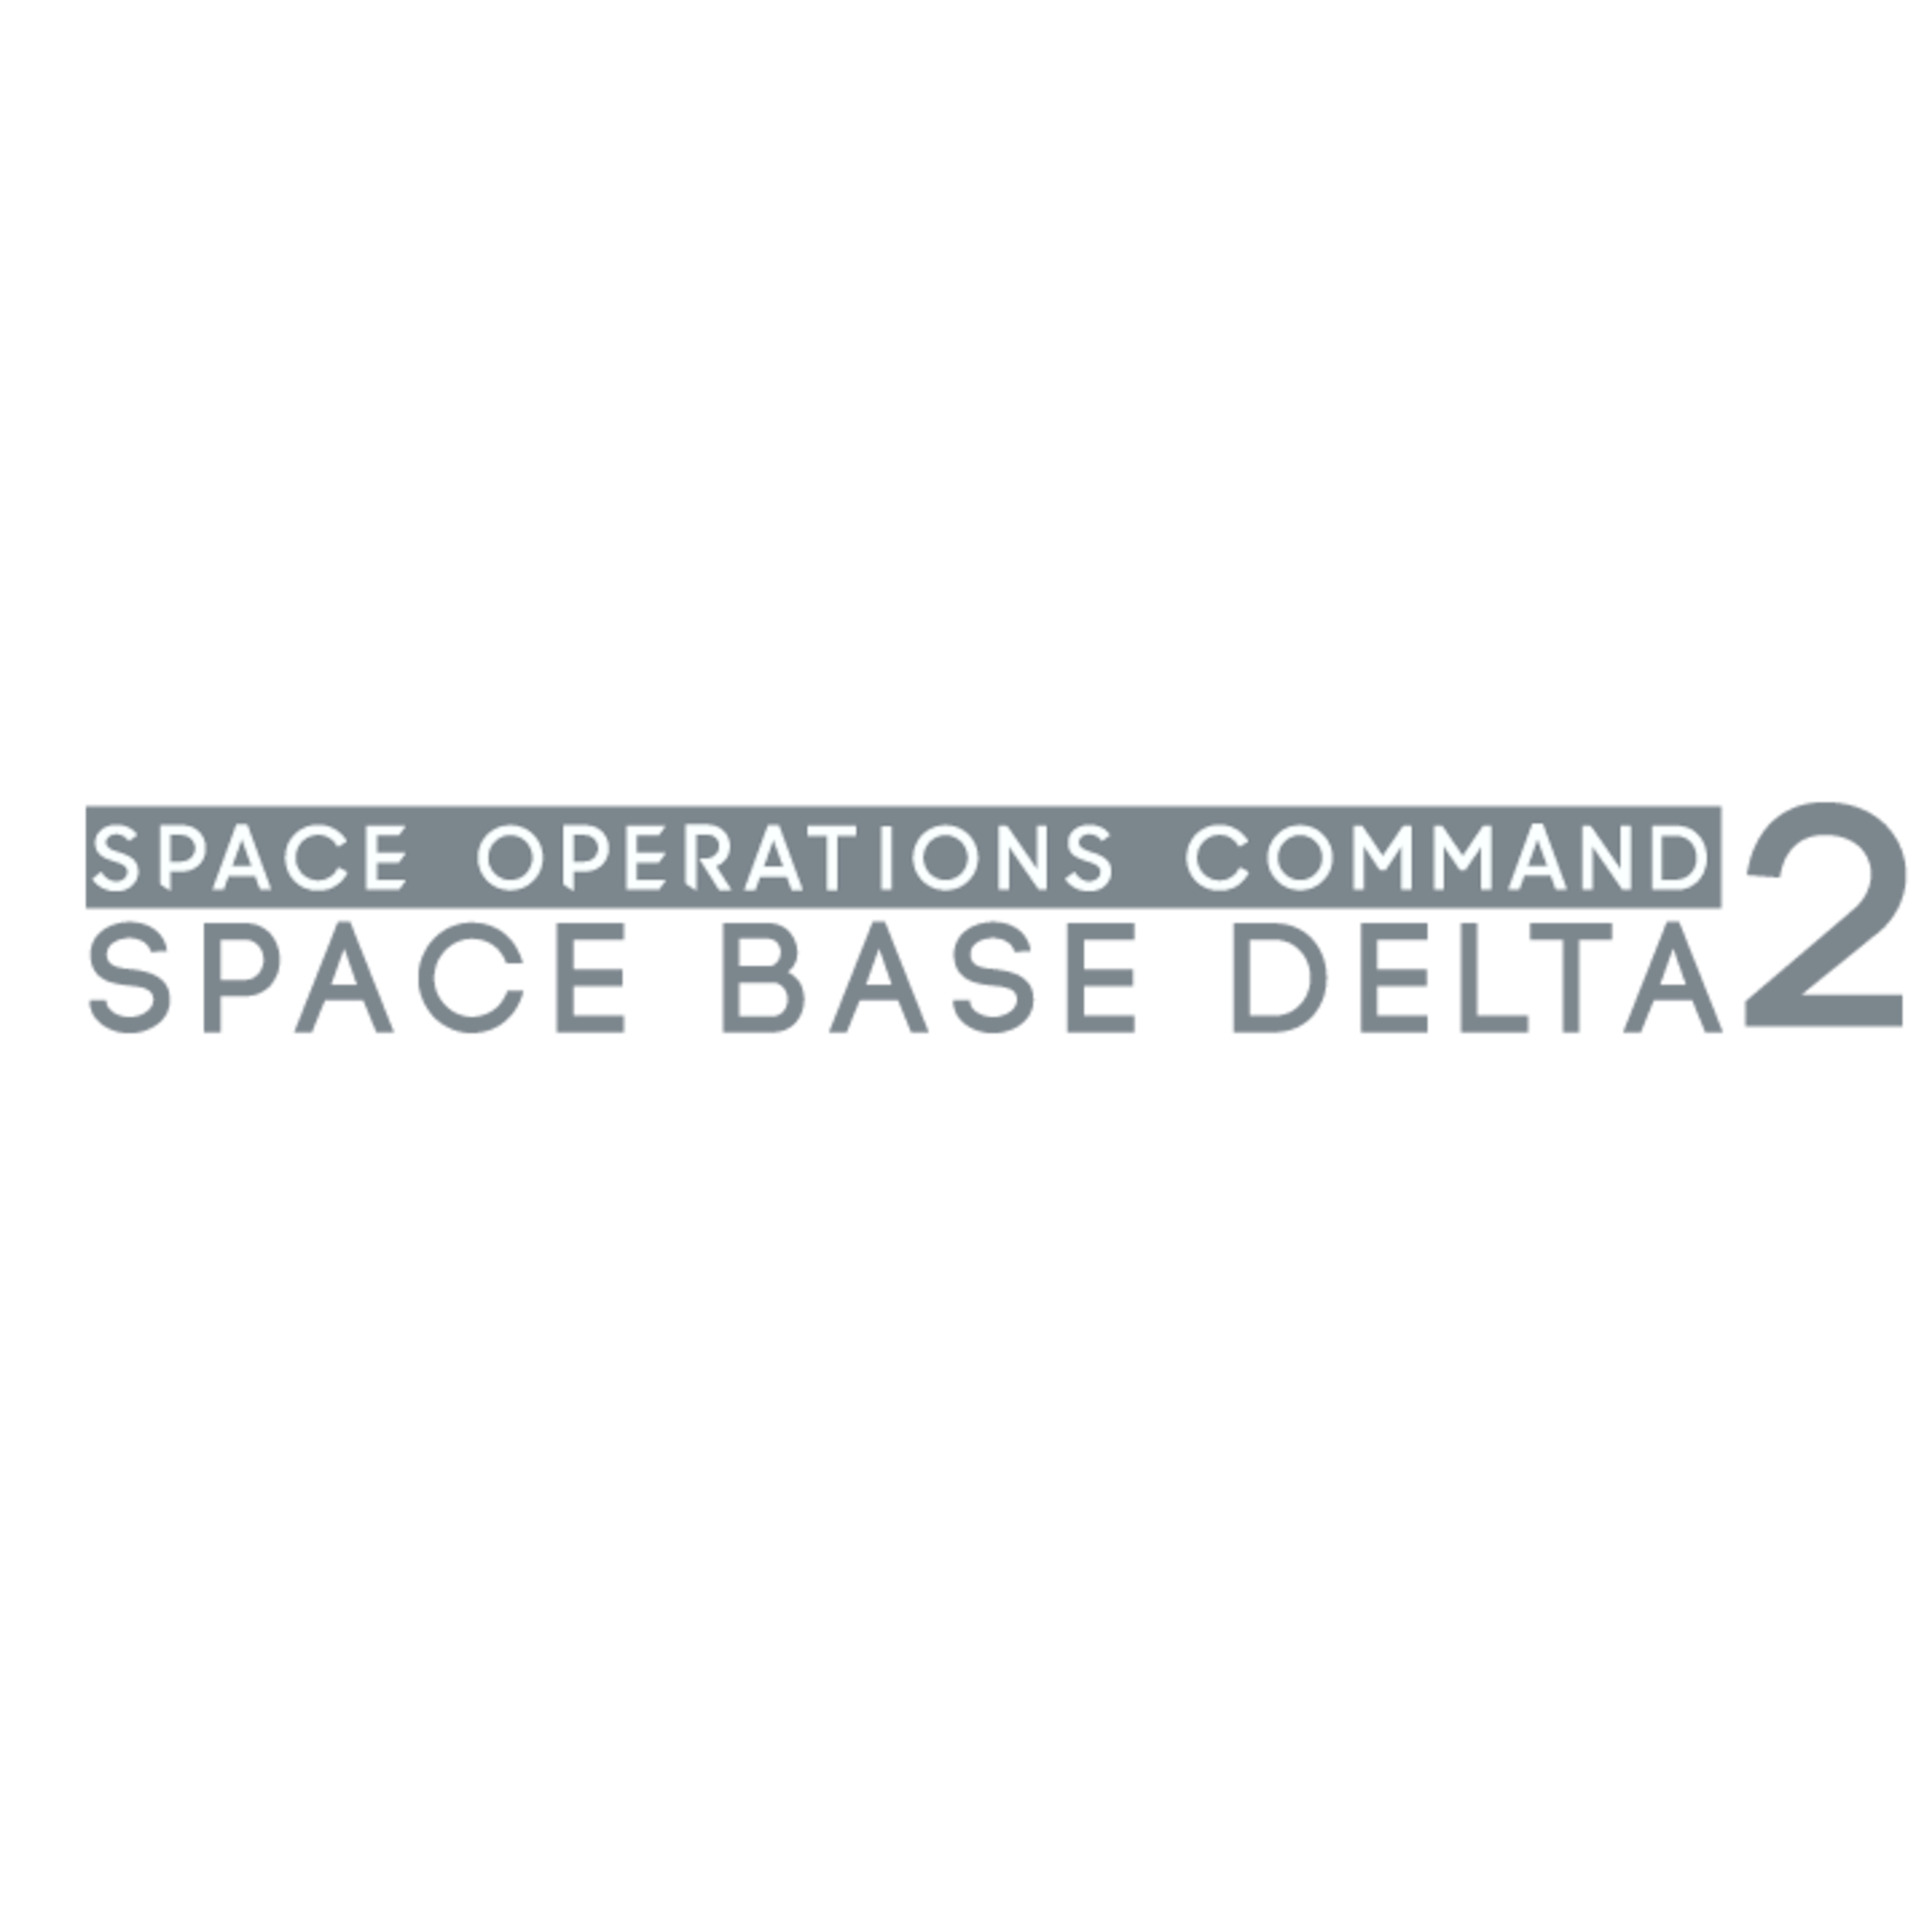 Space Base Delta 2 Wordmark